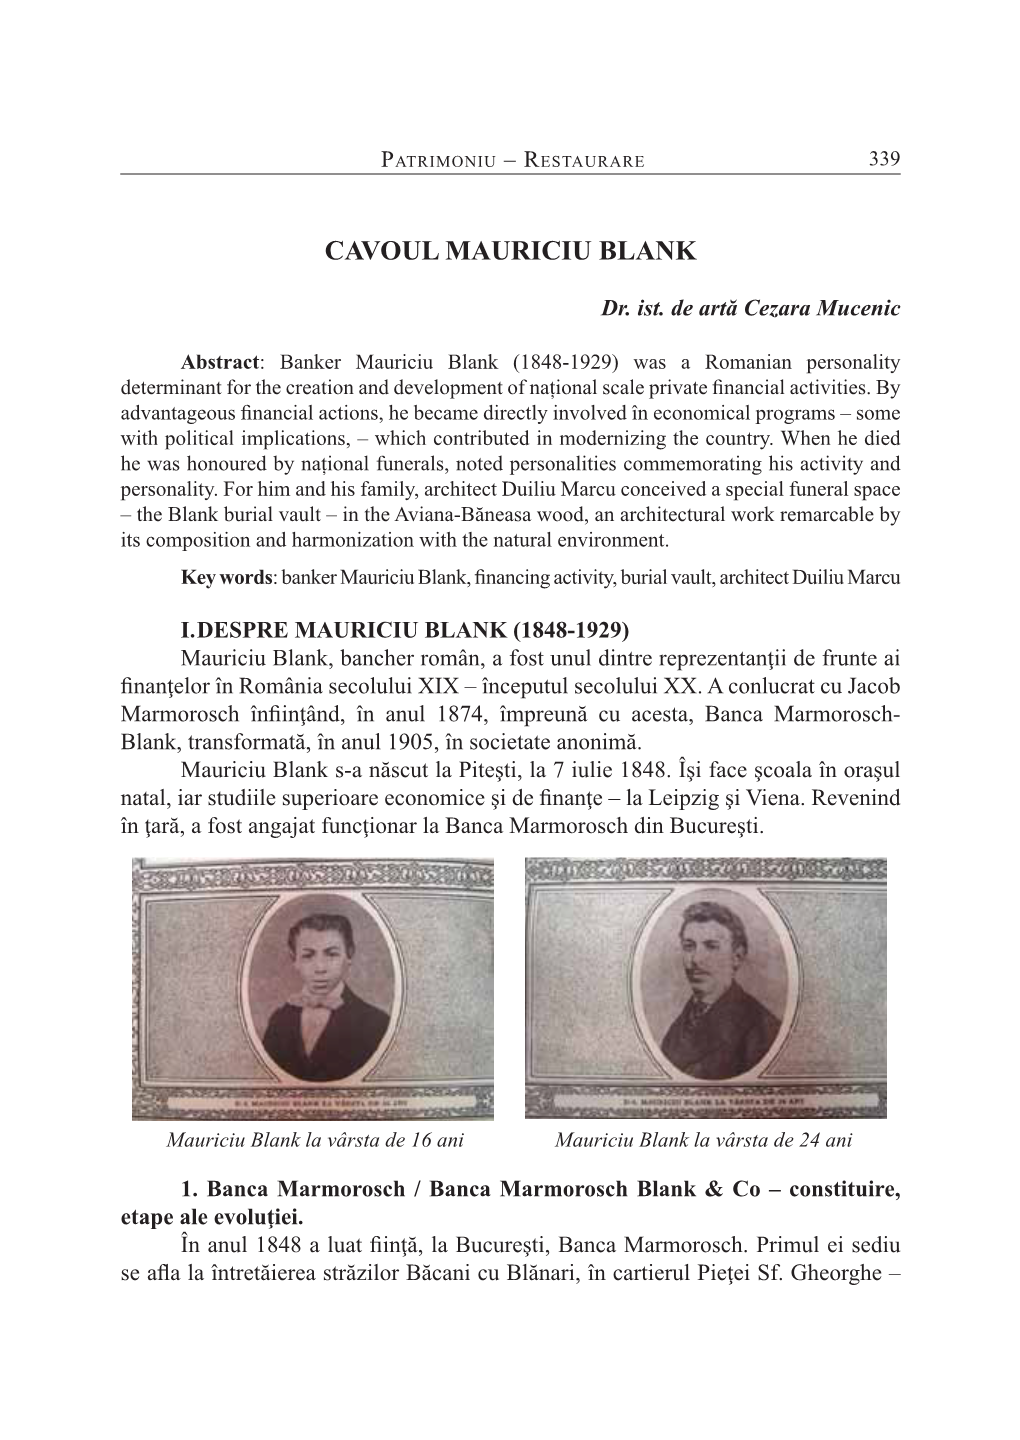 Cavoul Mauriciu Blank